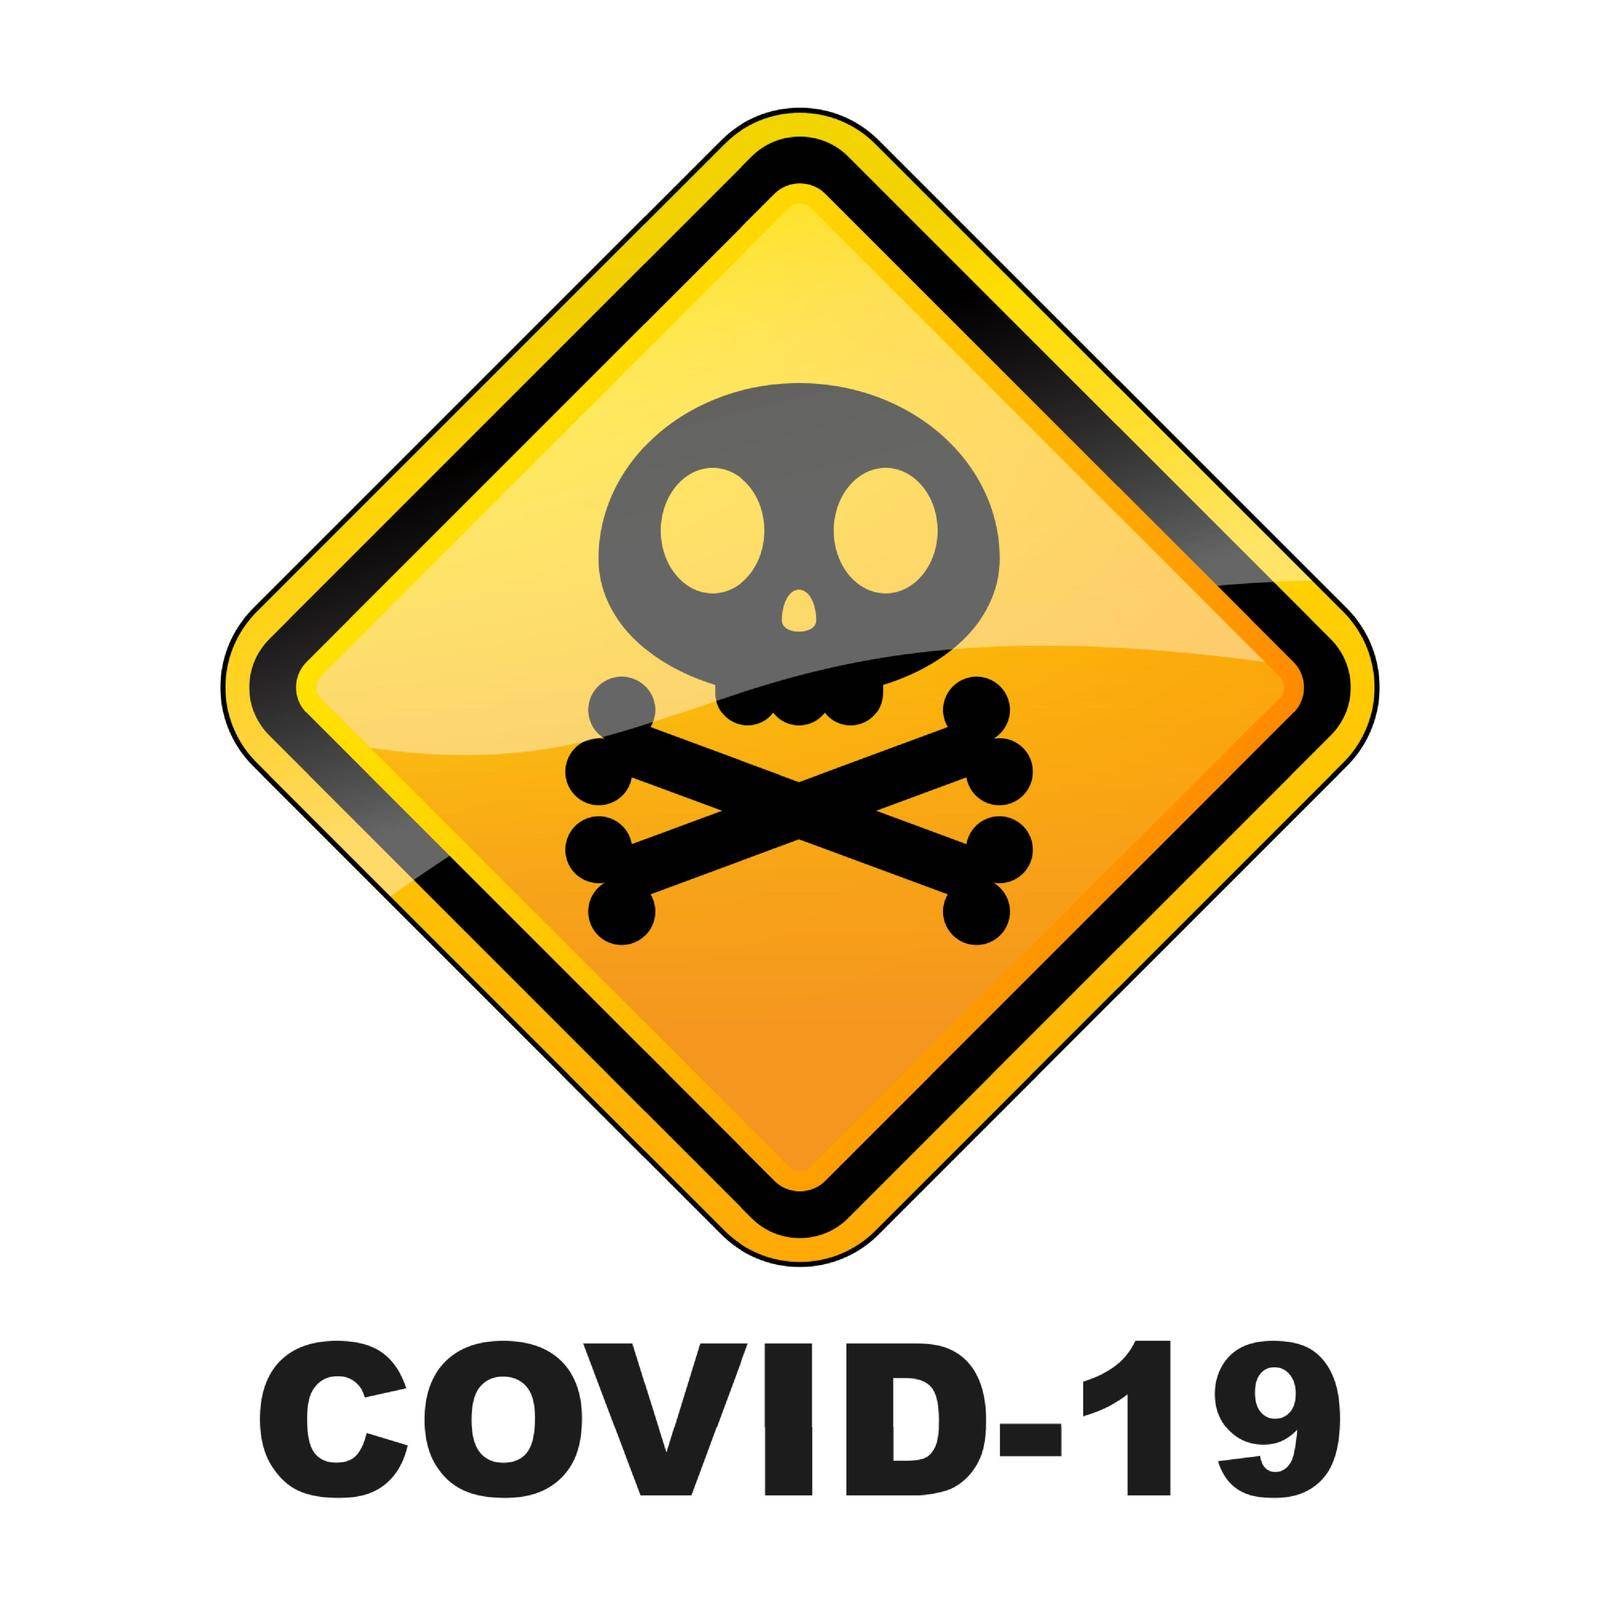 Covid-19 warning symbol. Coronavirus danger sign. by Chekman